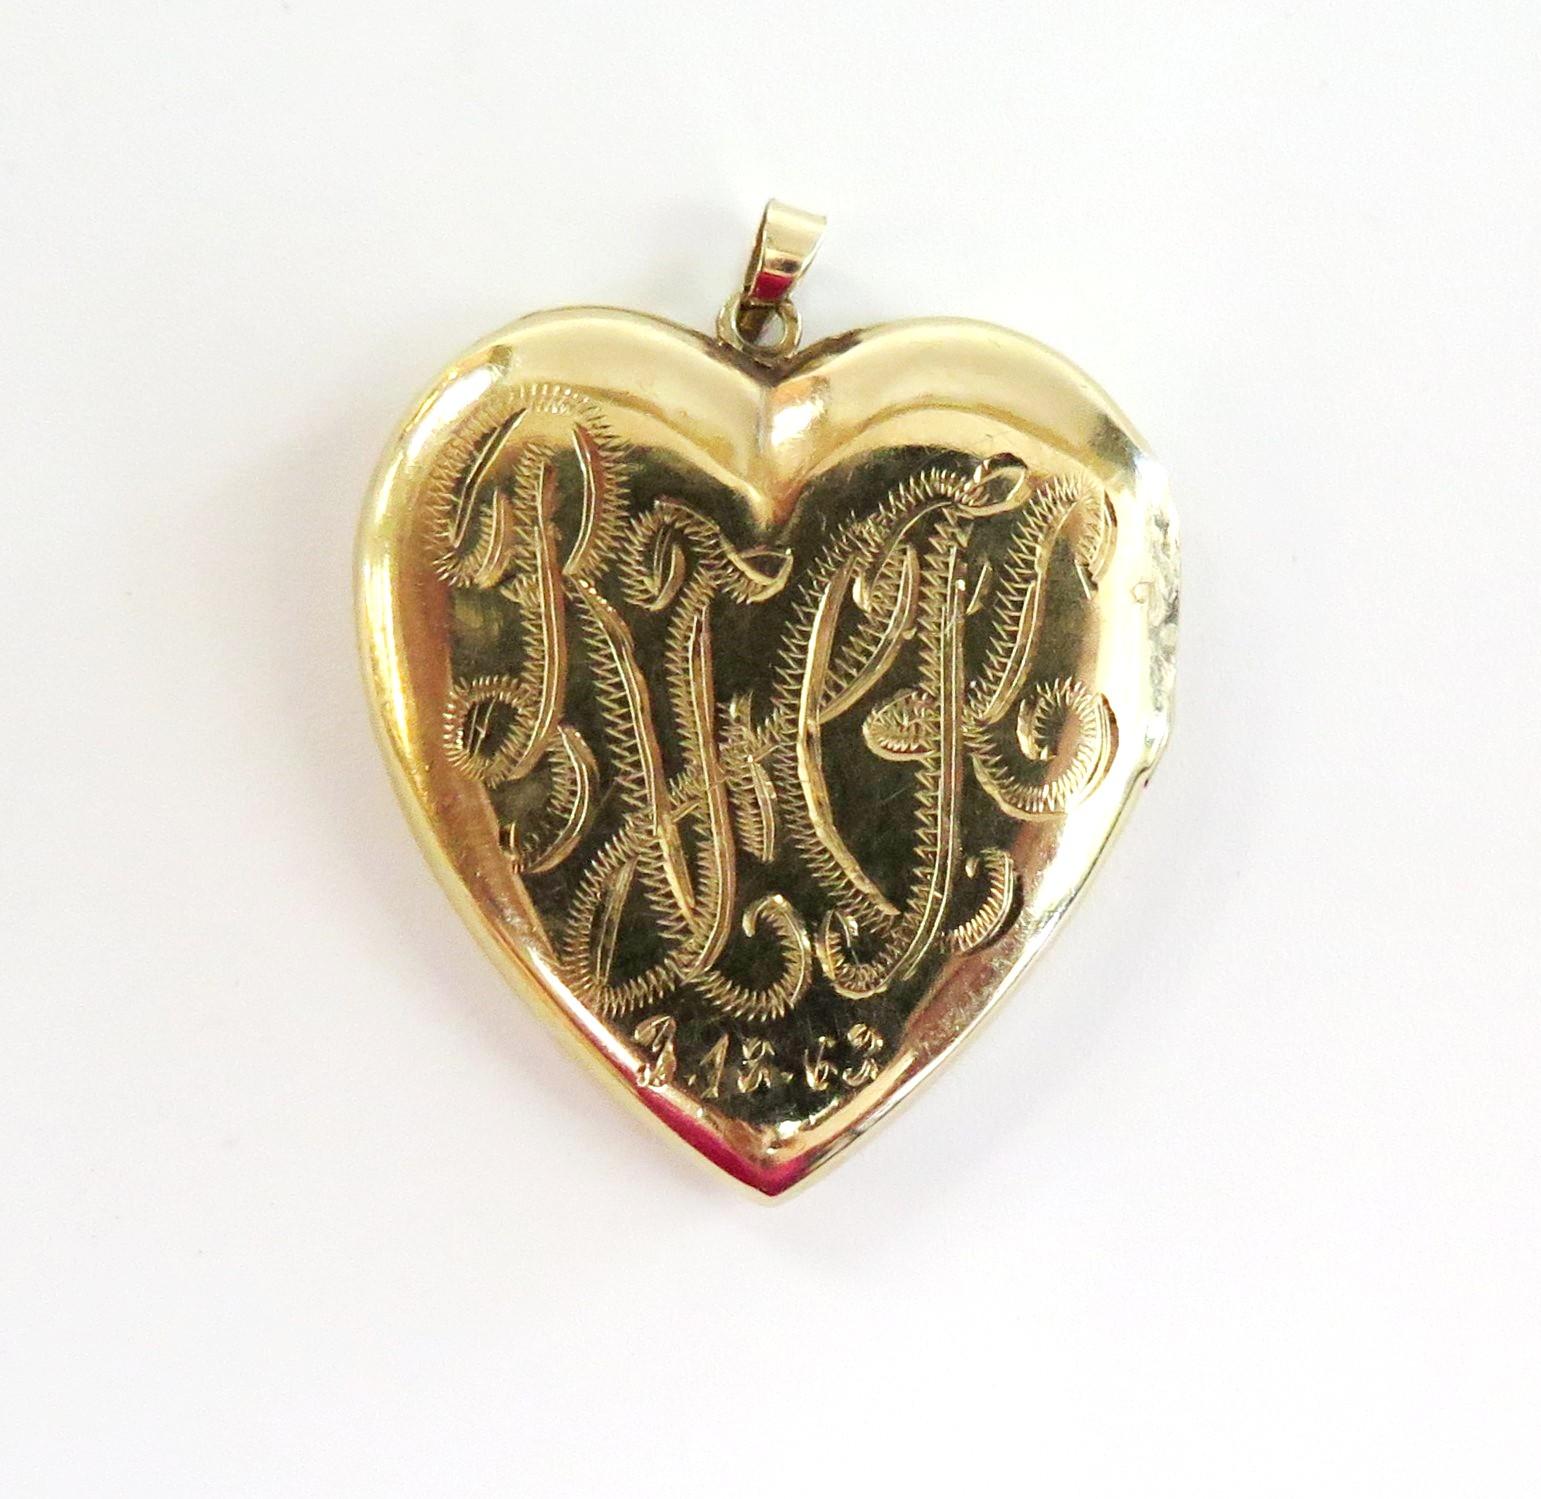 Retro Engraved Heart Shaped Locket with Center Diamond or 14 Karat